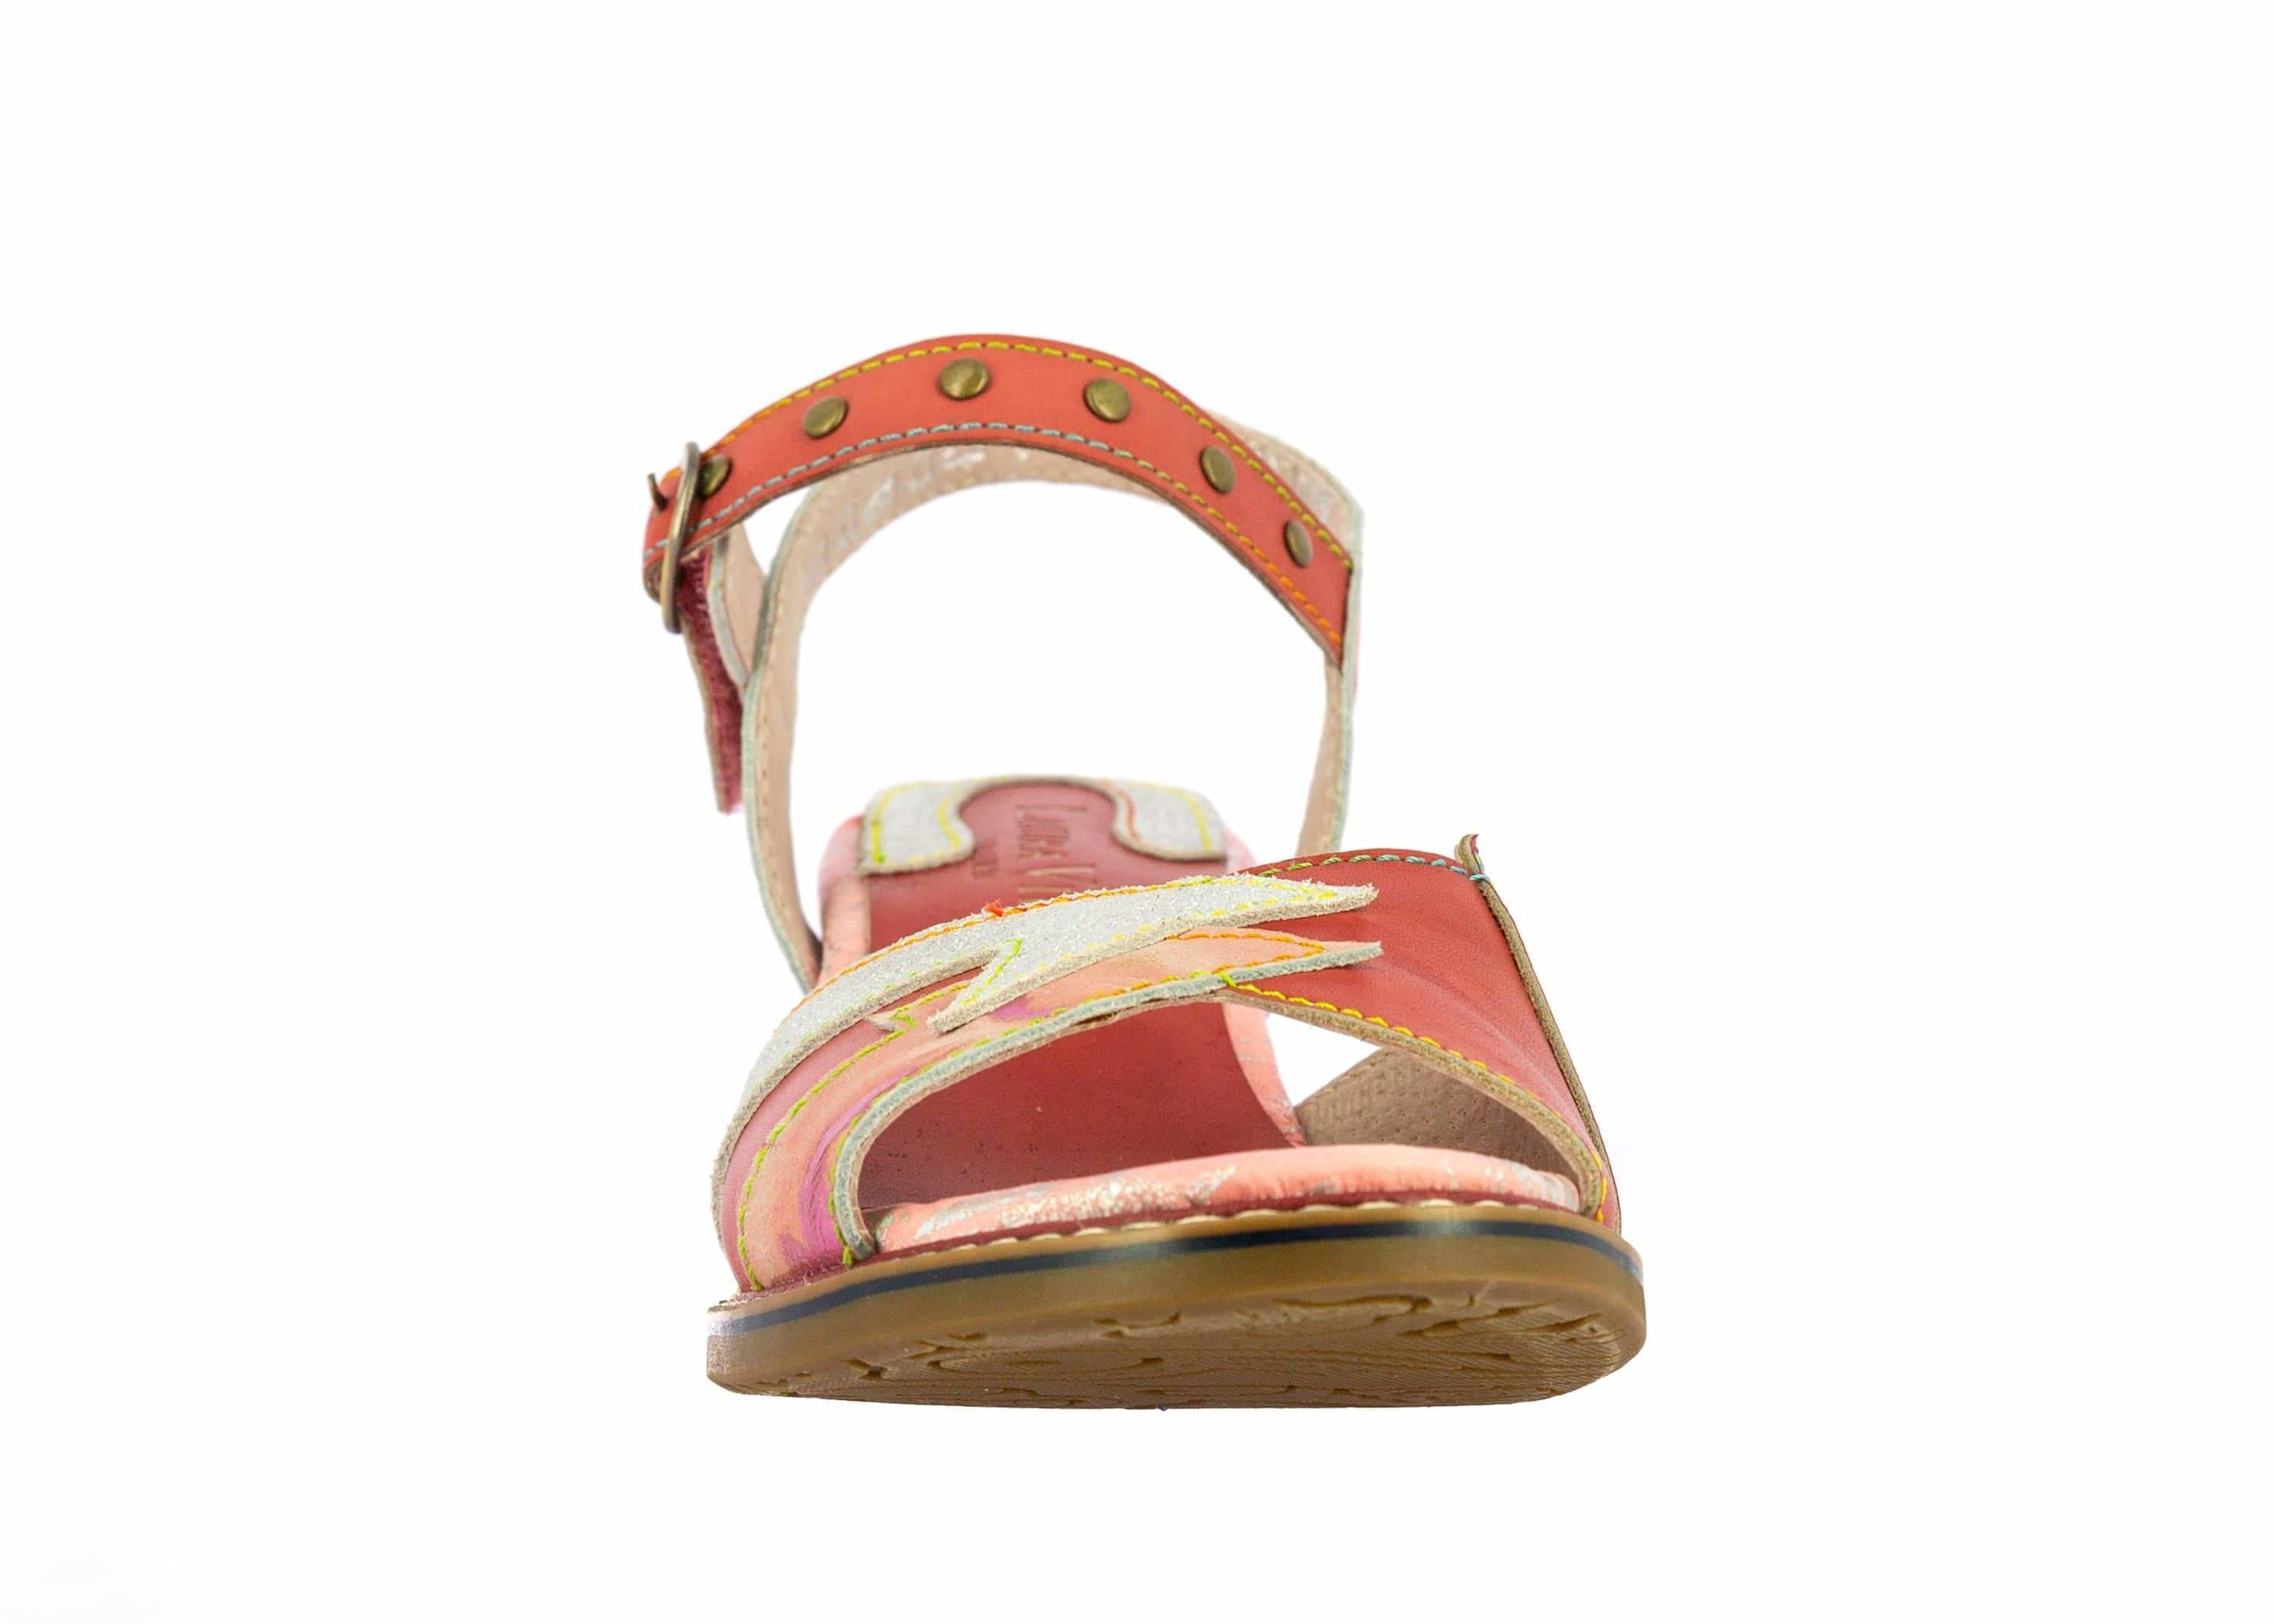 Schuh DICEGOO019 - Sandale